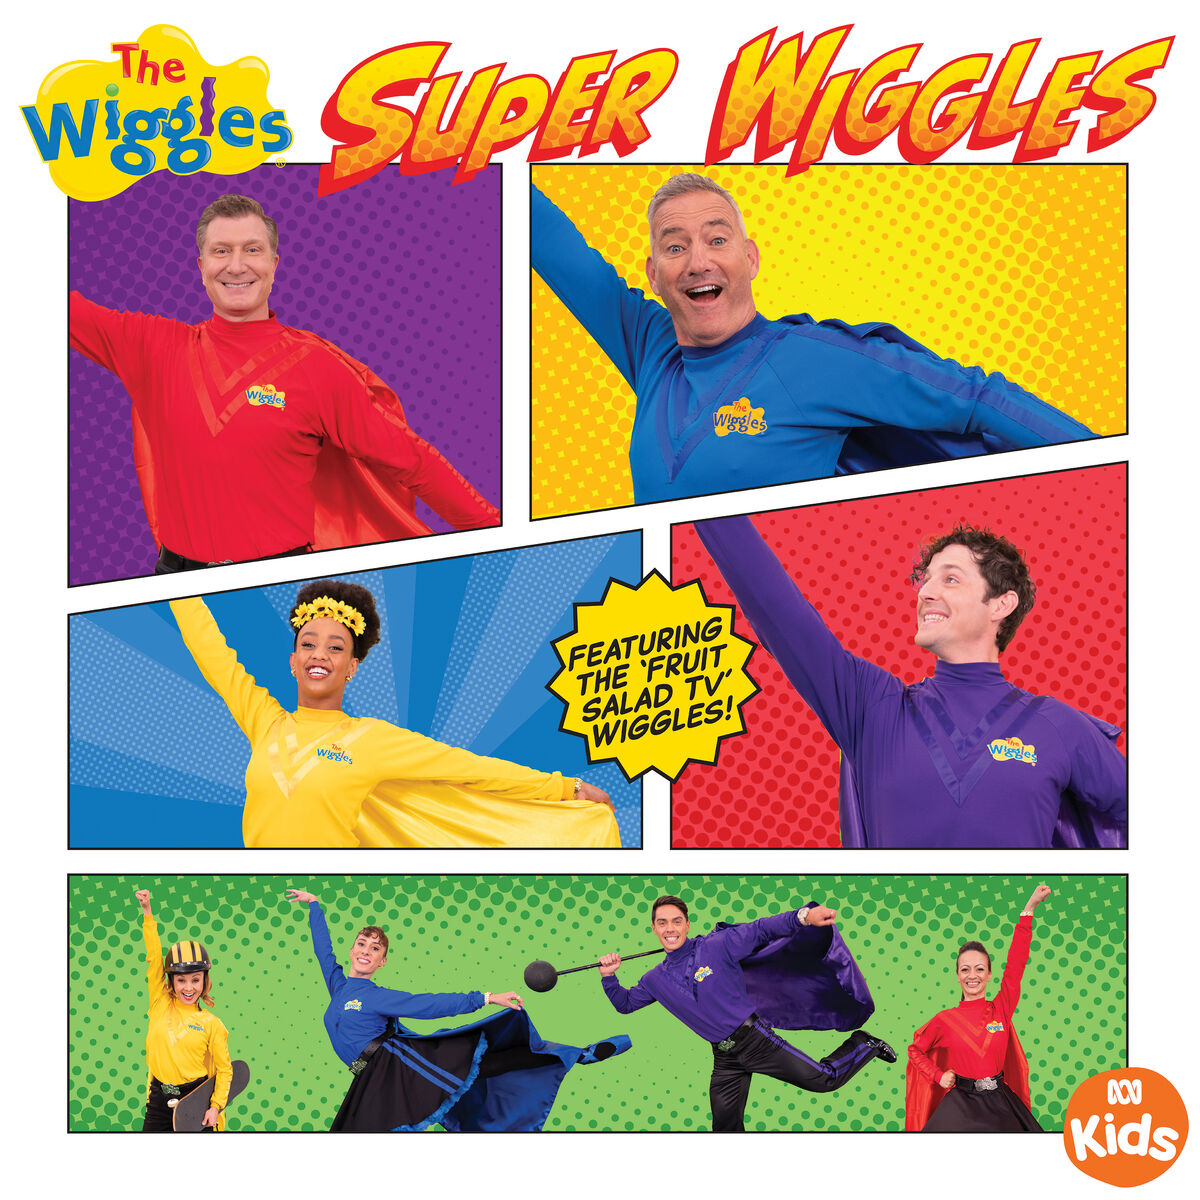 Super Wiggles Wigglepedia Fandom